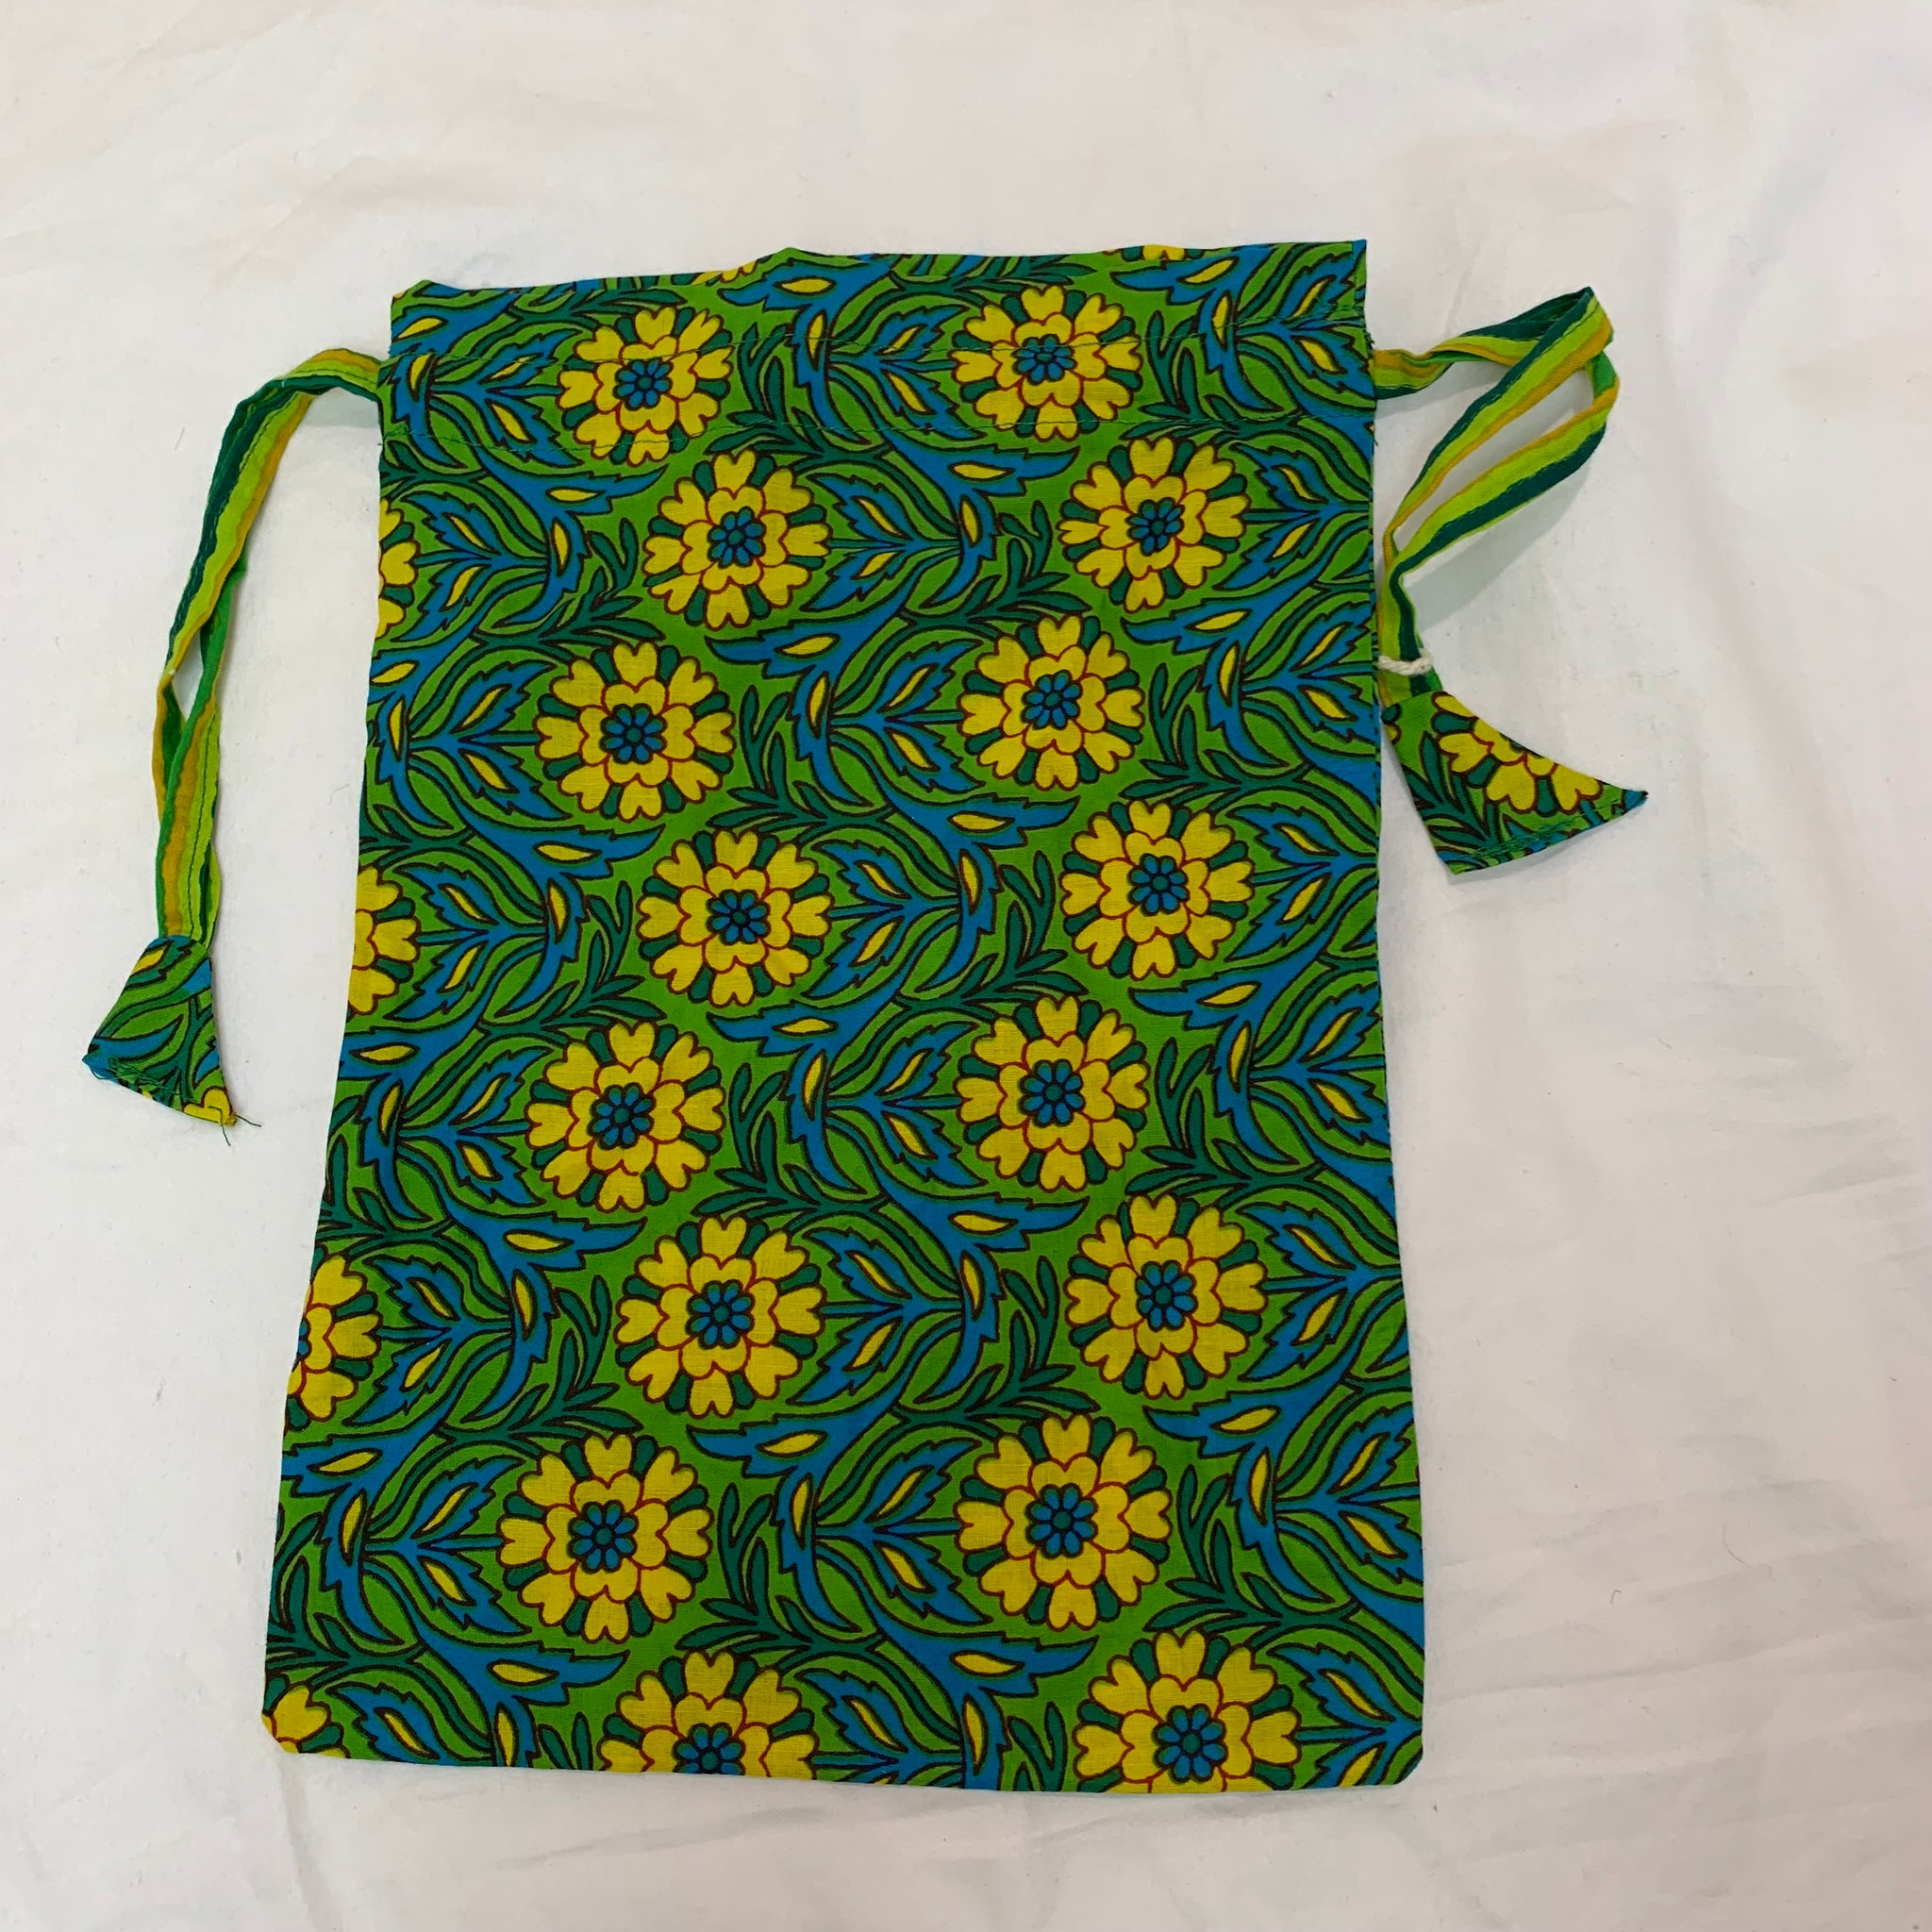 Fair Trade Ethical Gift Bag Eco Alternative Sunny Flowers Design